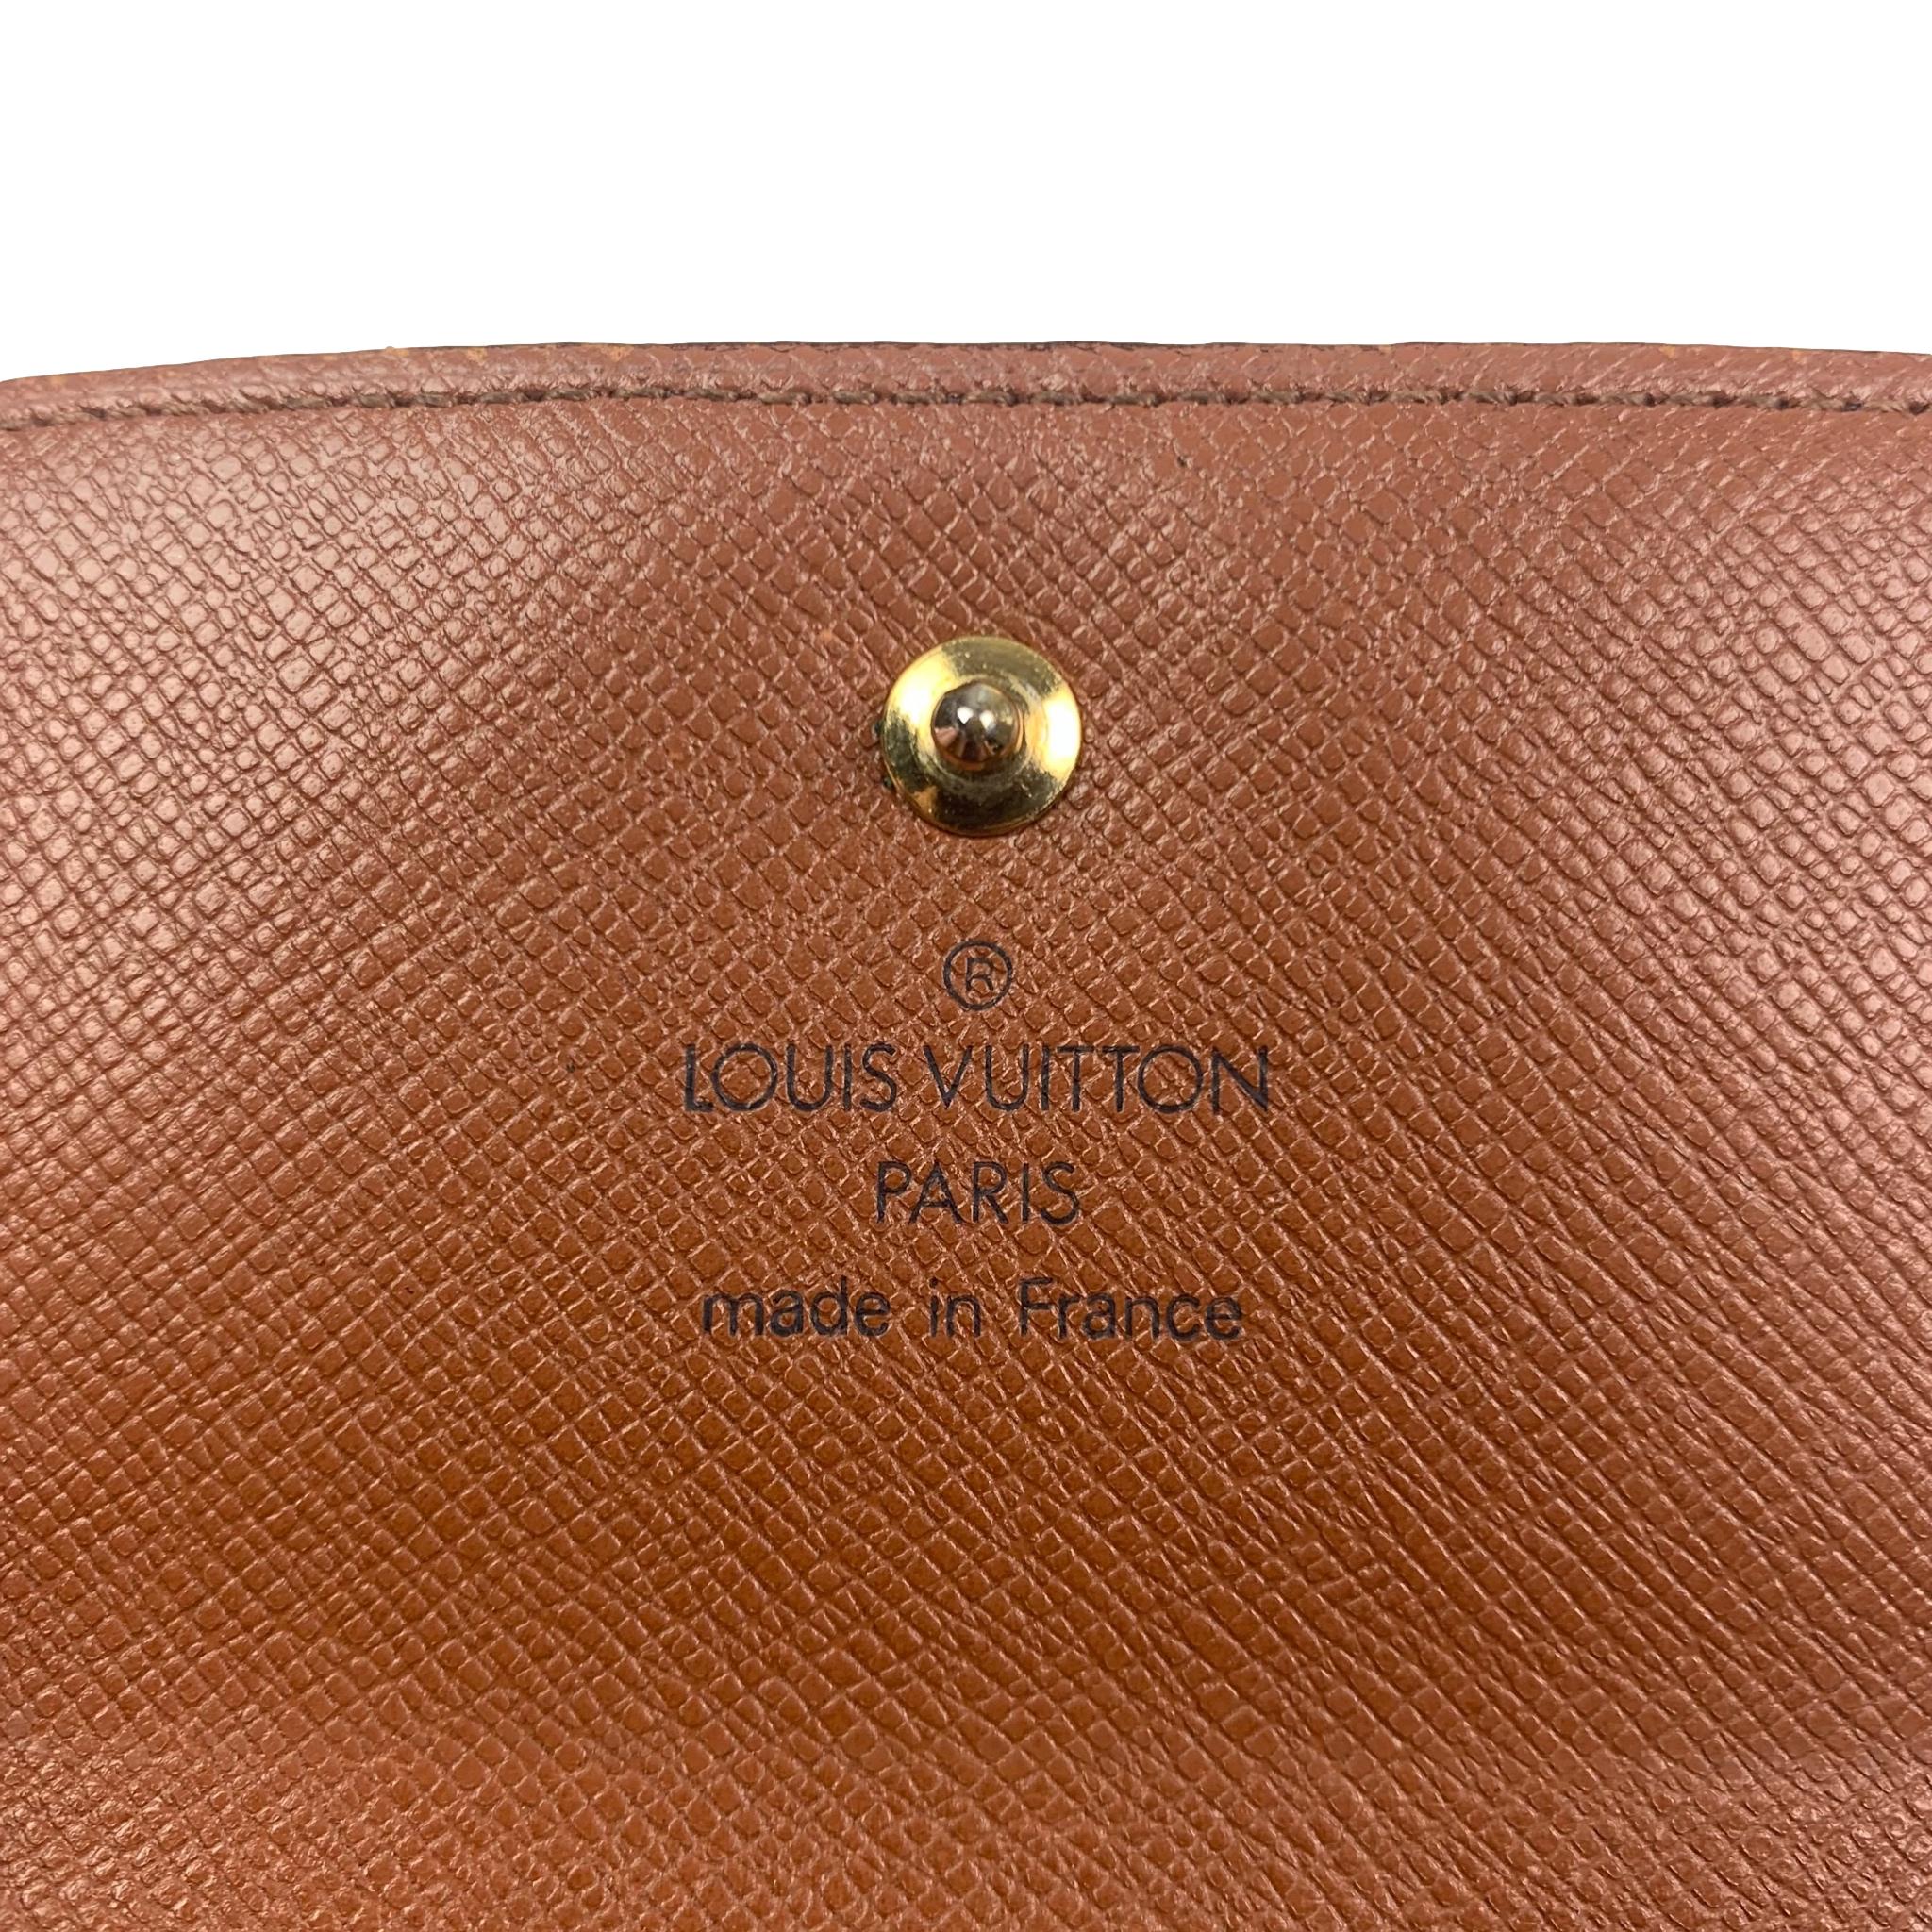 Louis Vuitton monogram vintage French purse wallet – My